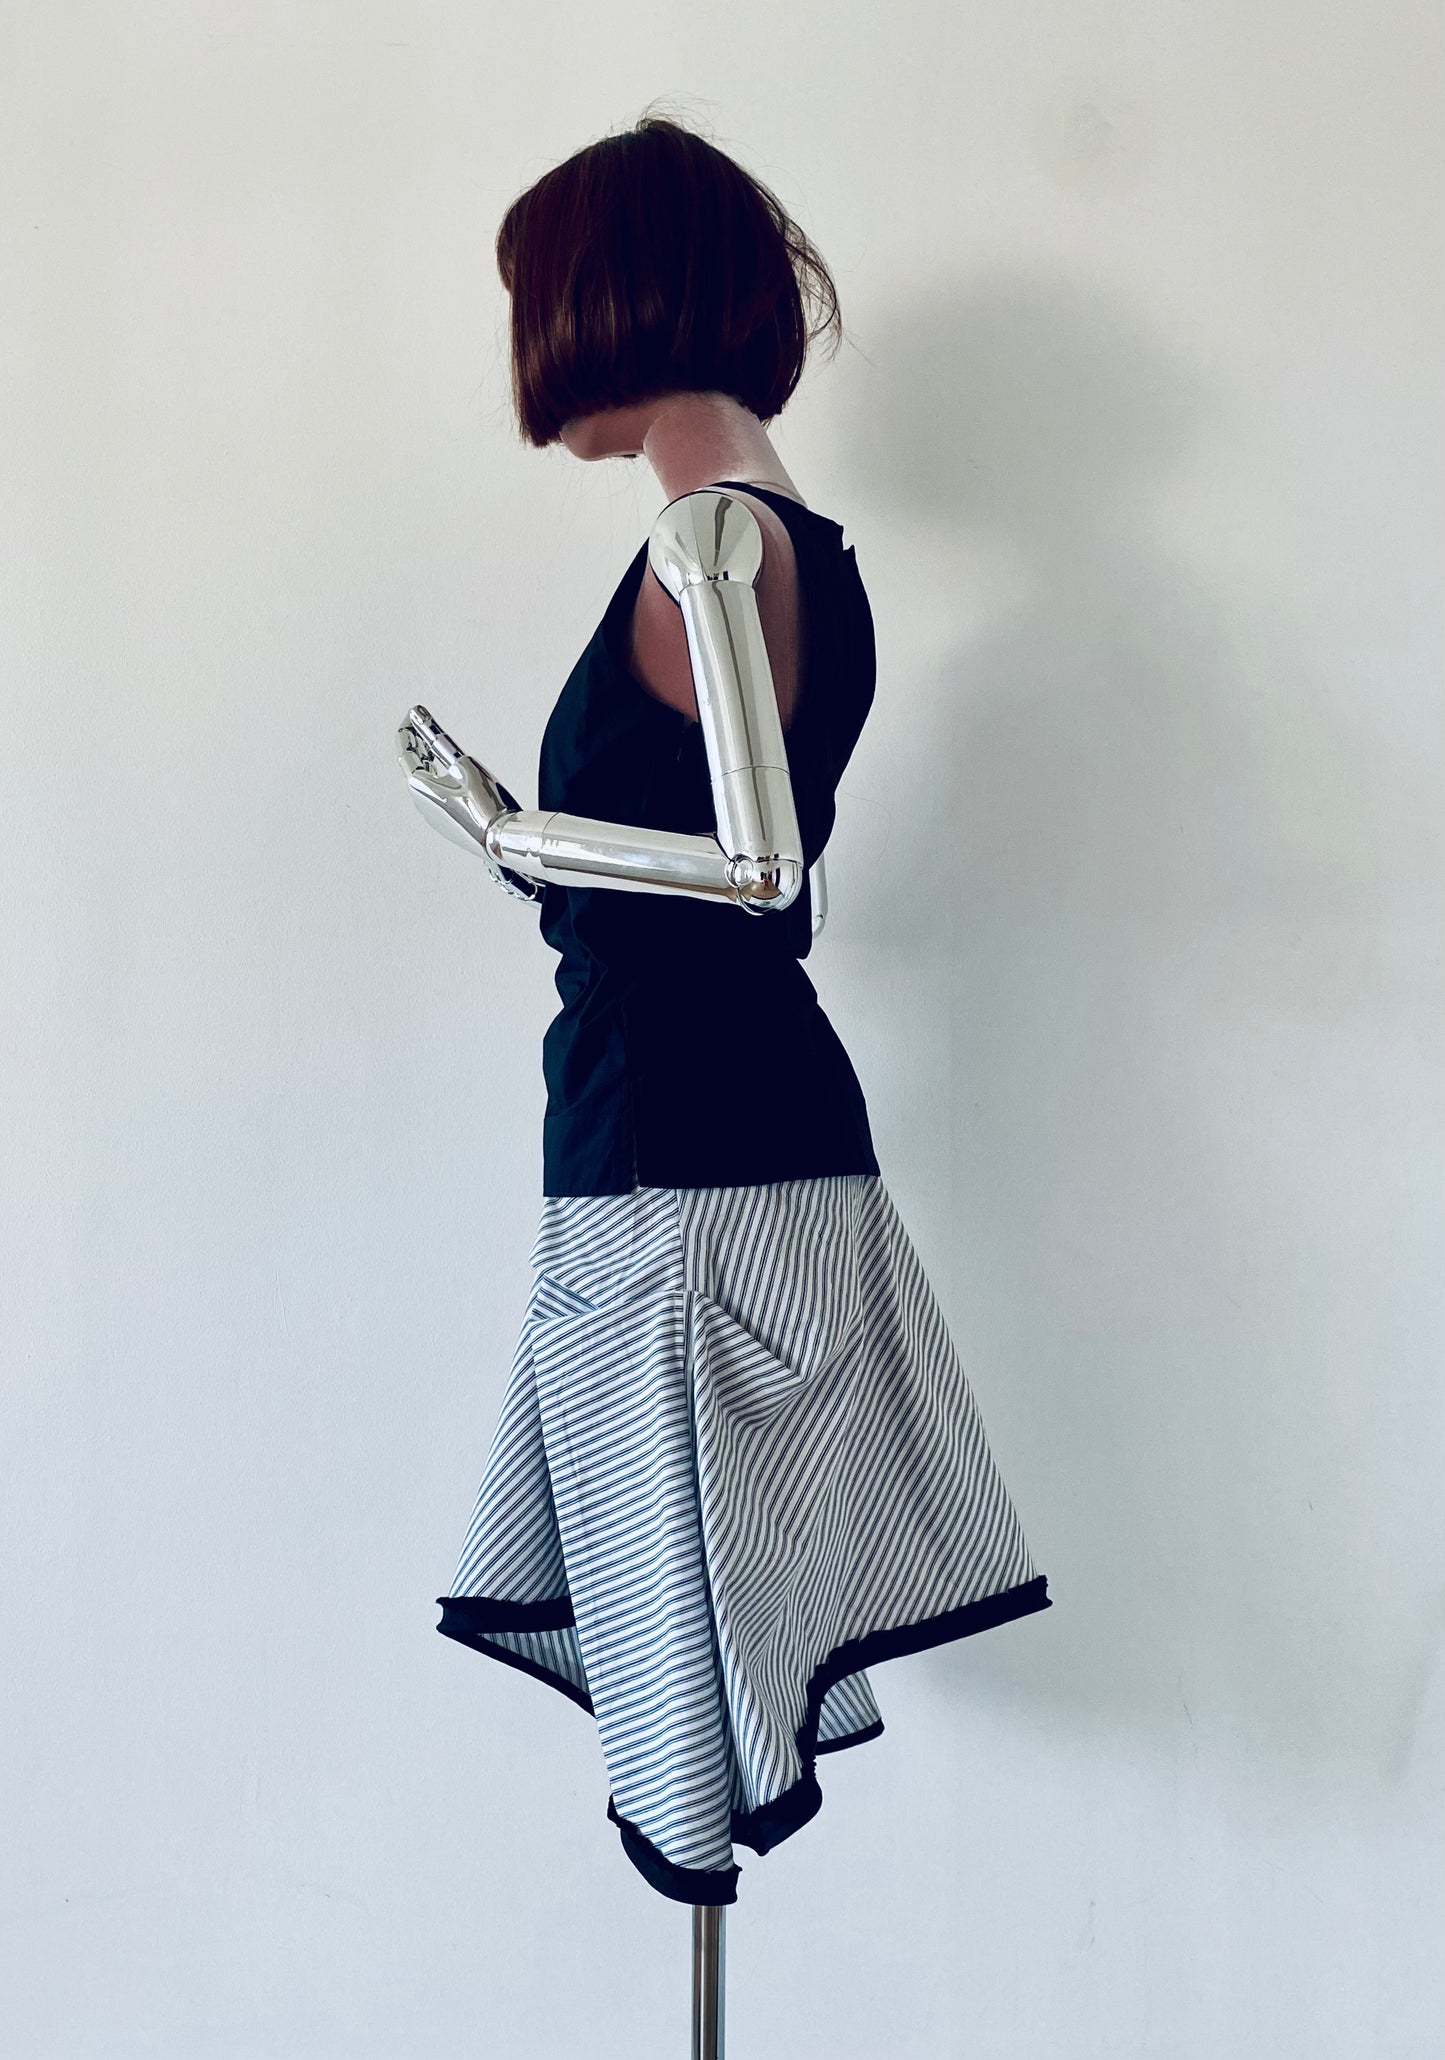 Flamenco style -cotton skirt. Stripe skirt,Day skirt Boho style skirt with signature pleats